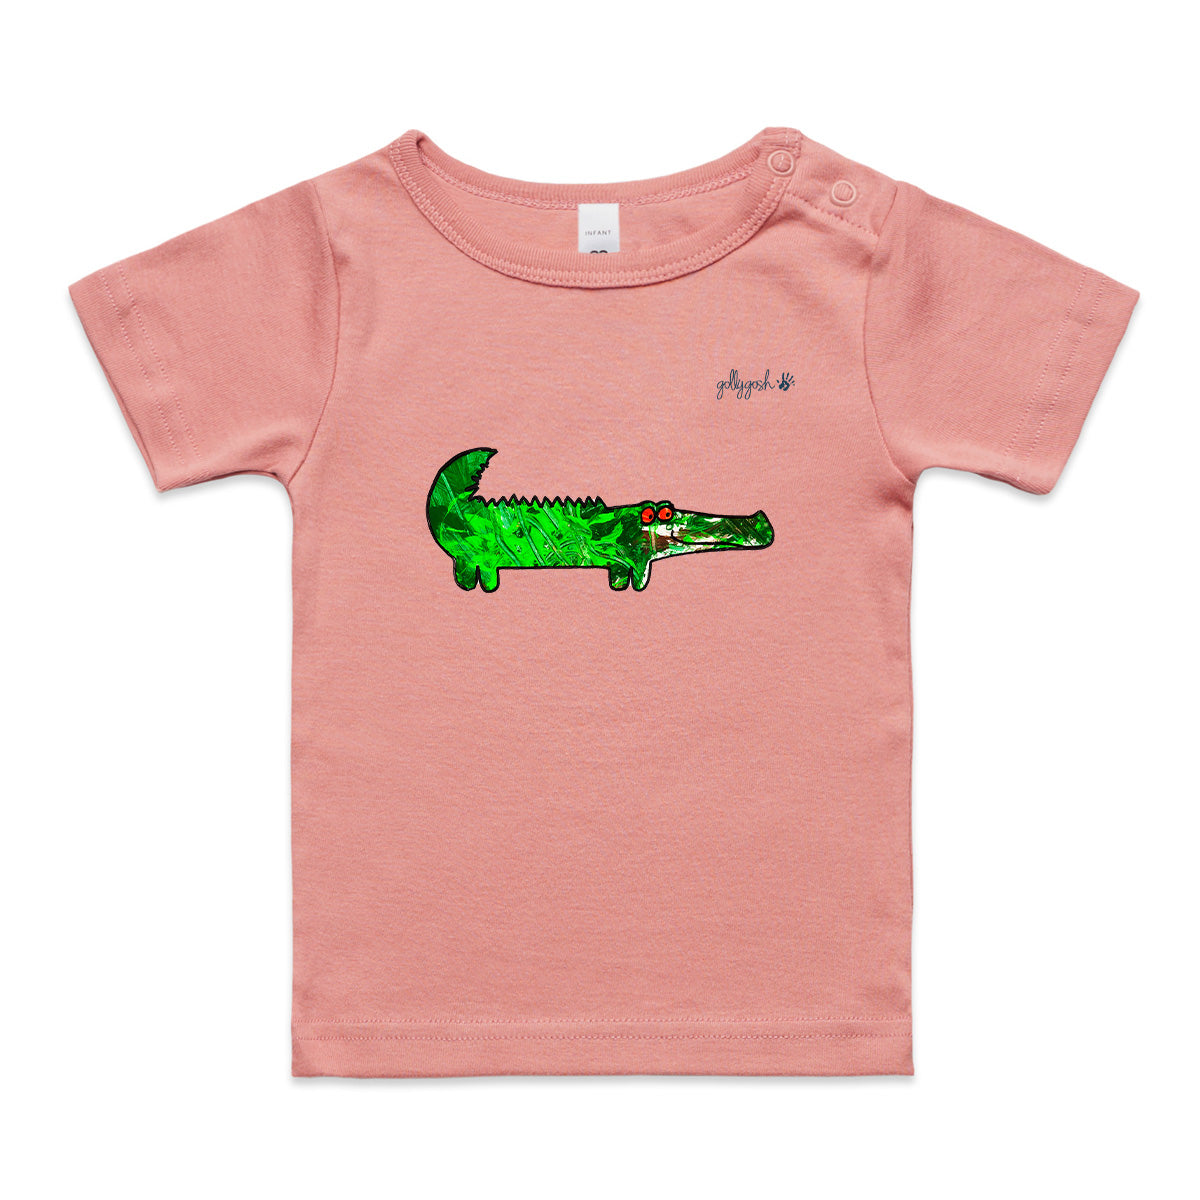 Alligator - Infant Wee Tee